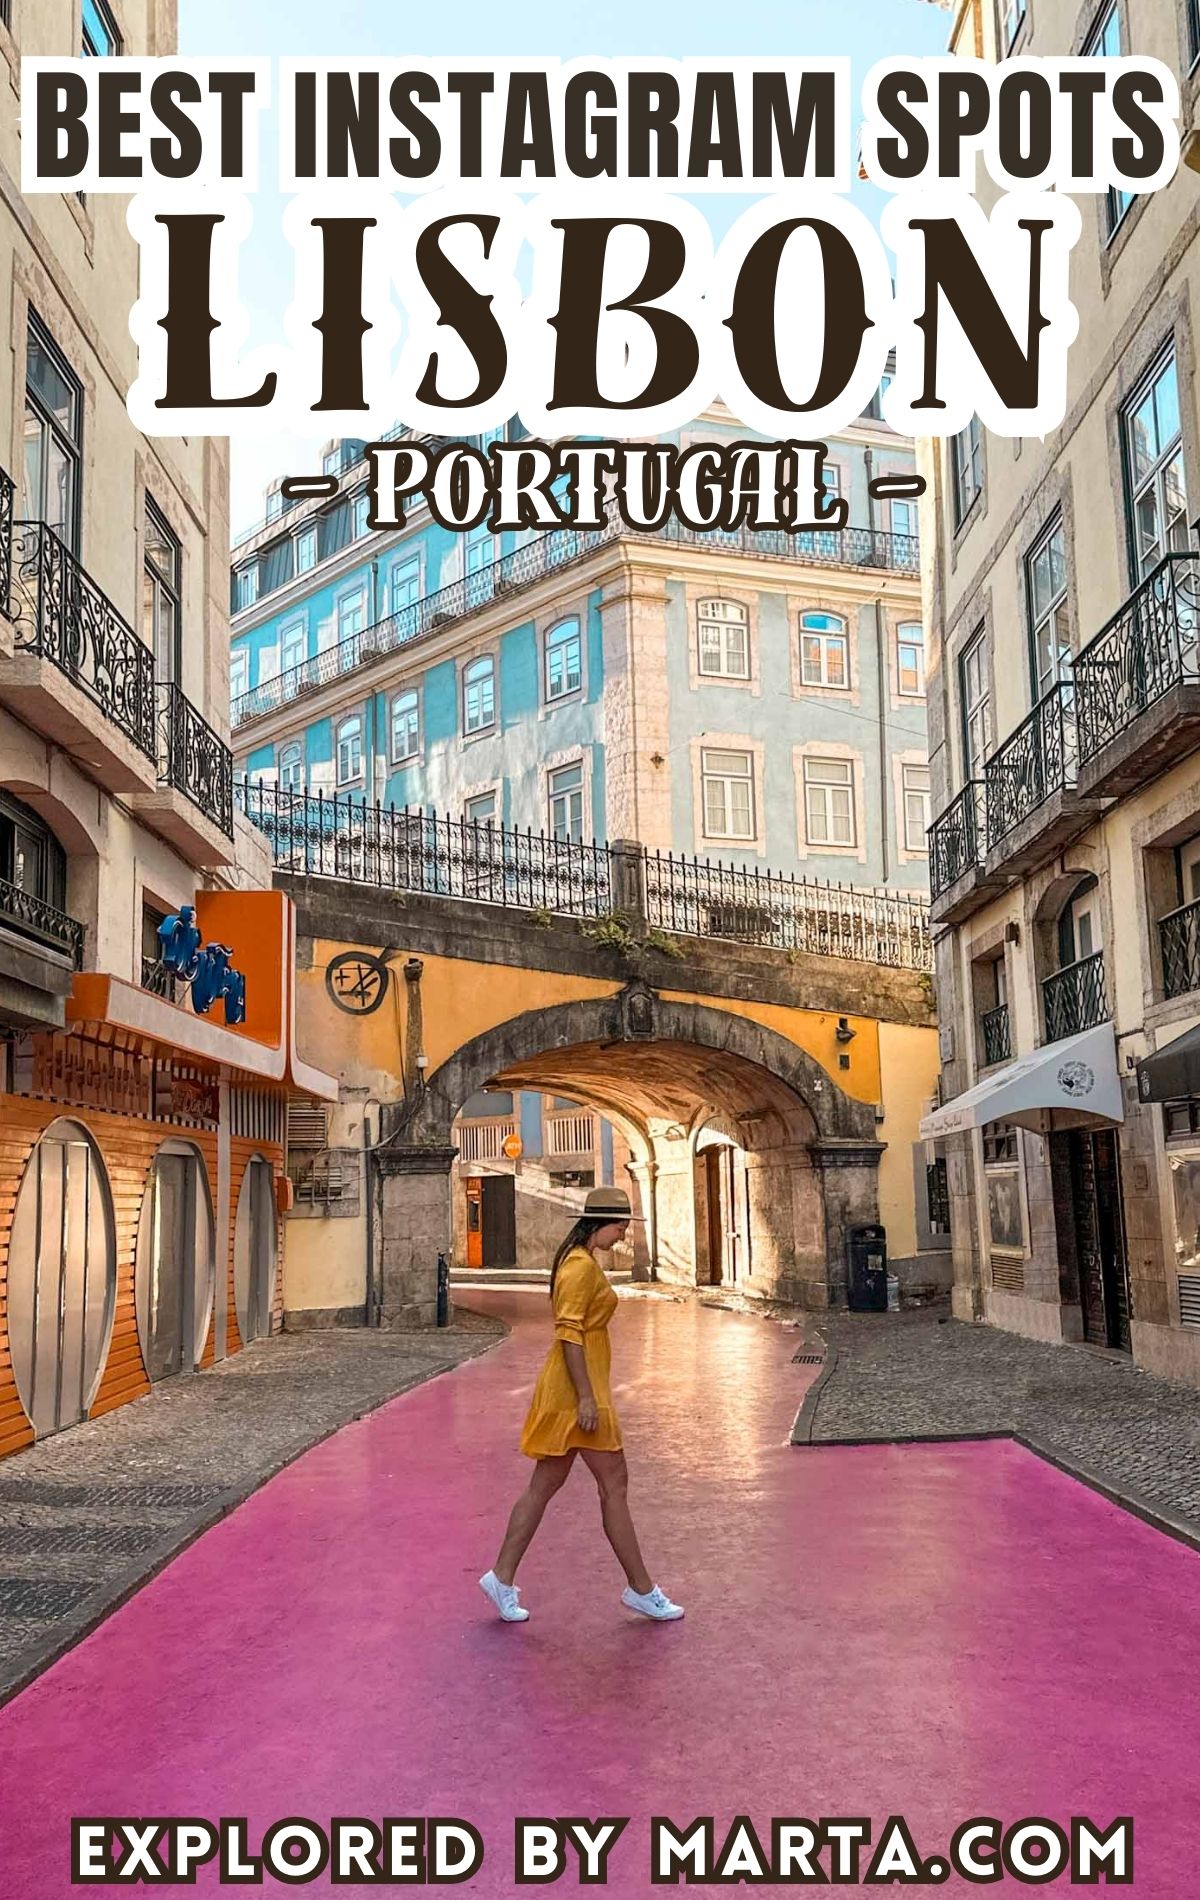 Best Instagram spots in Lisbon - Instagrammable photo spots you should visit when traveling to Lisbon, Portugal